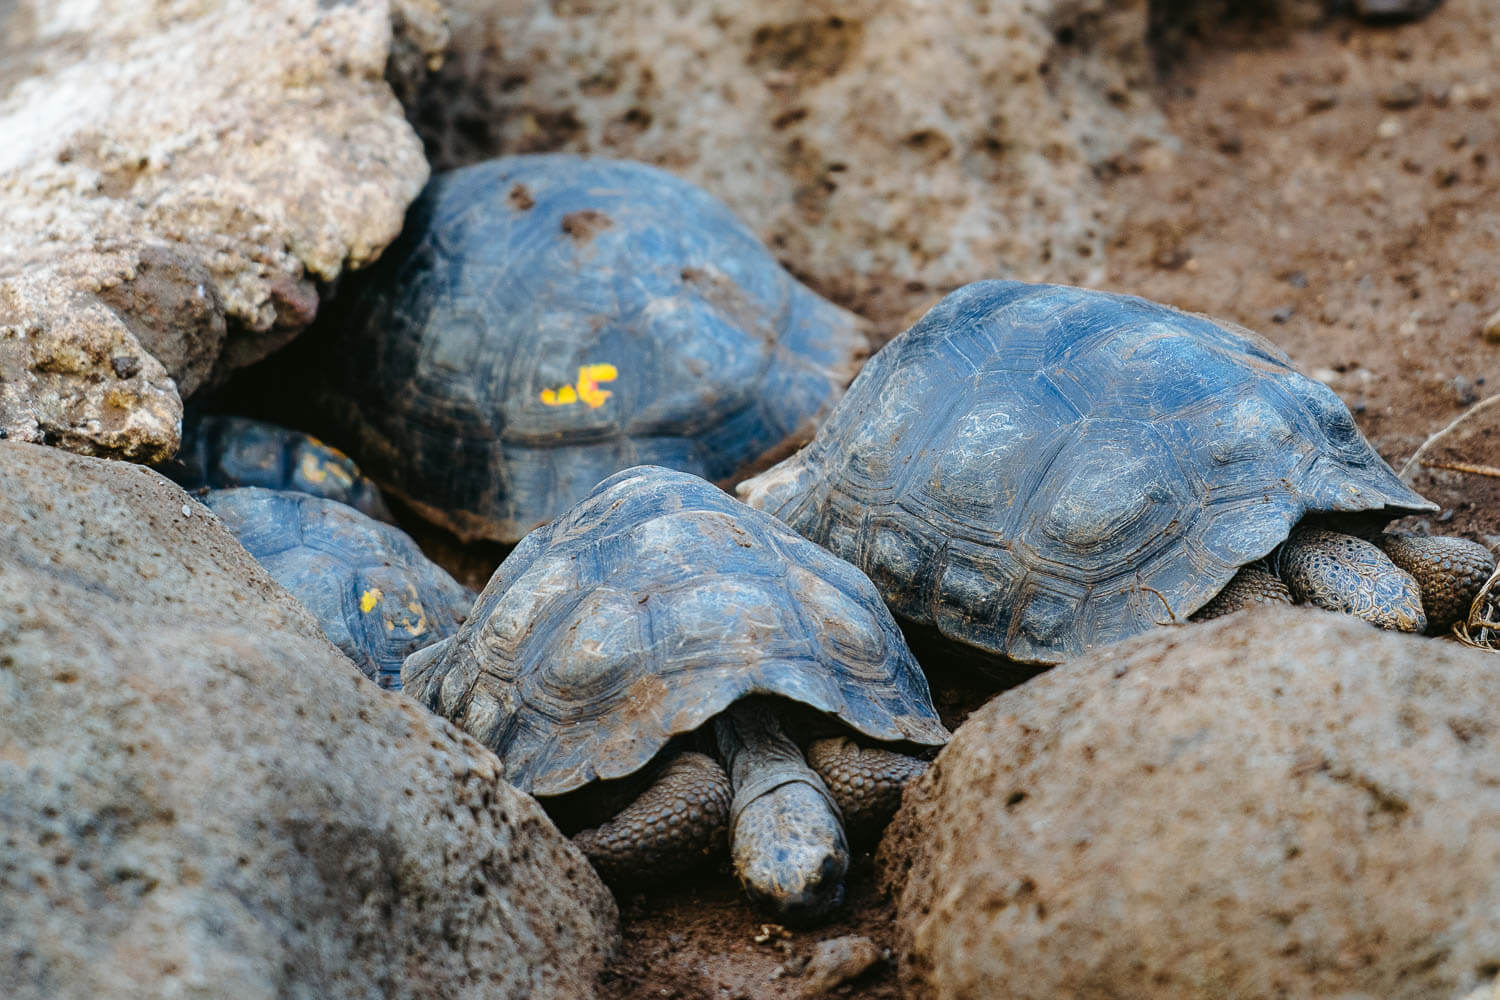 Juvenile Tortoises in "La Galapaguera" on the Highlands Tour in San Cristobal